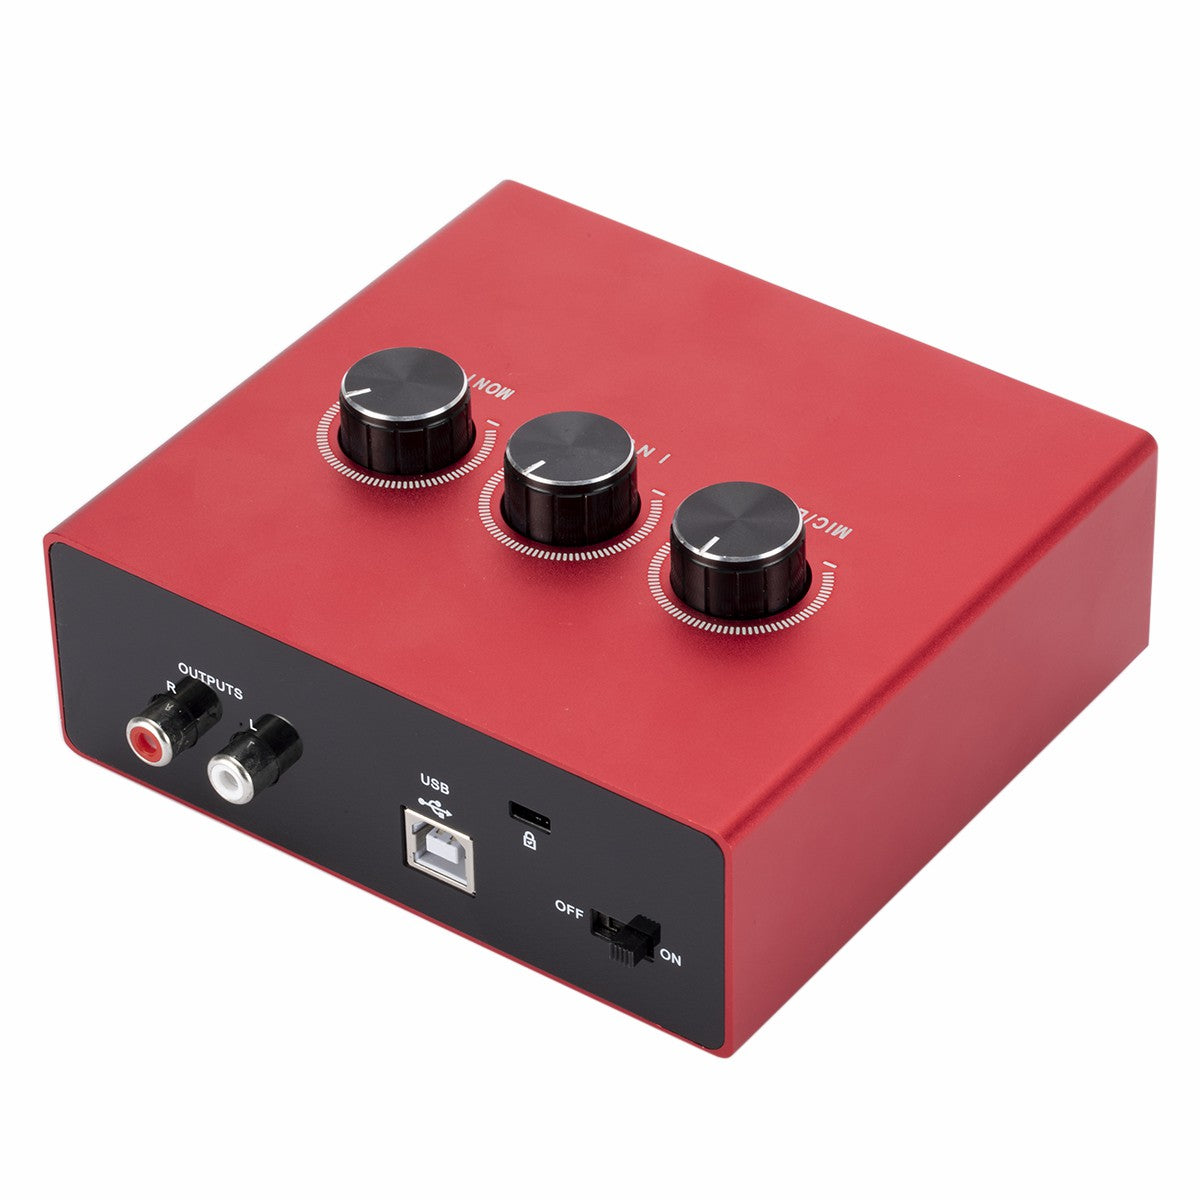 YJ Mixer External USB Sound Card Audio Interface Card Converter Adapter for Singing Studio Recording